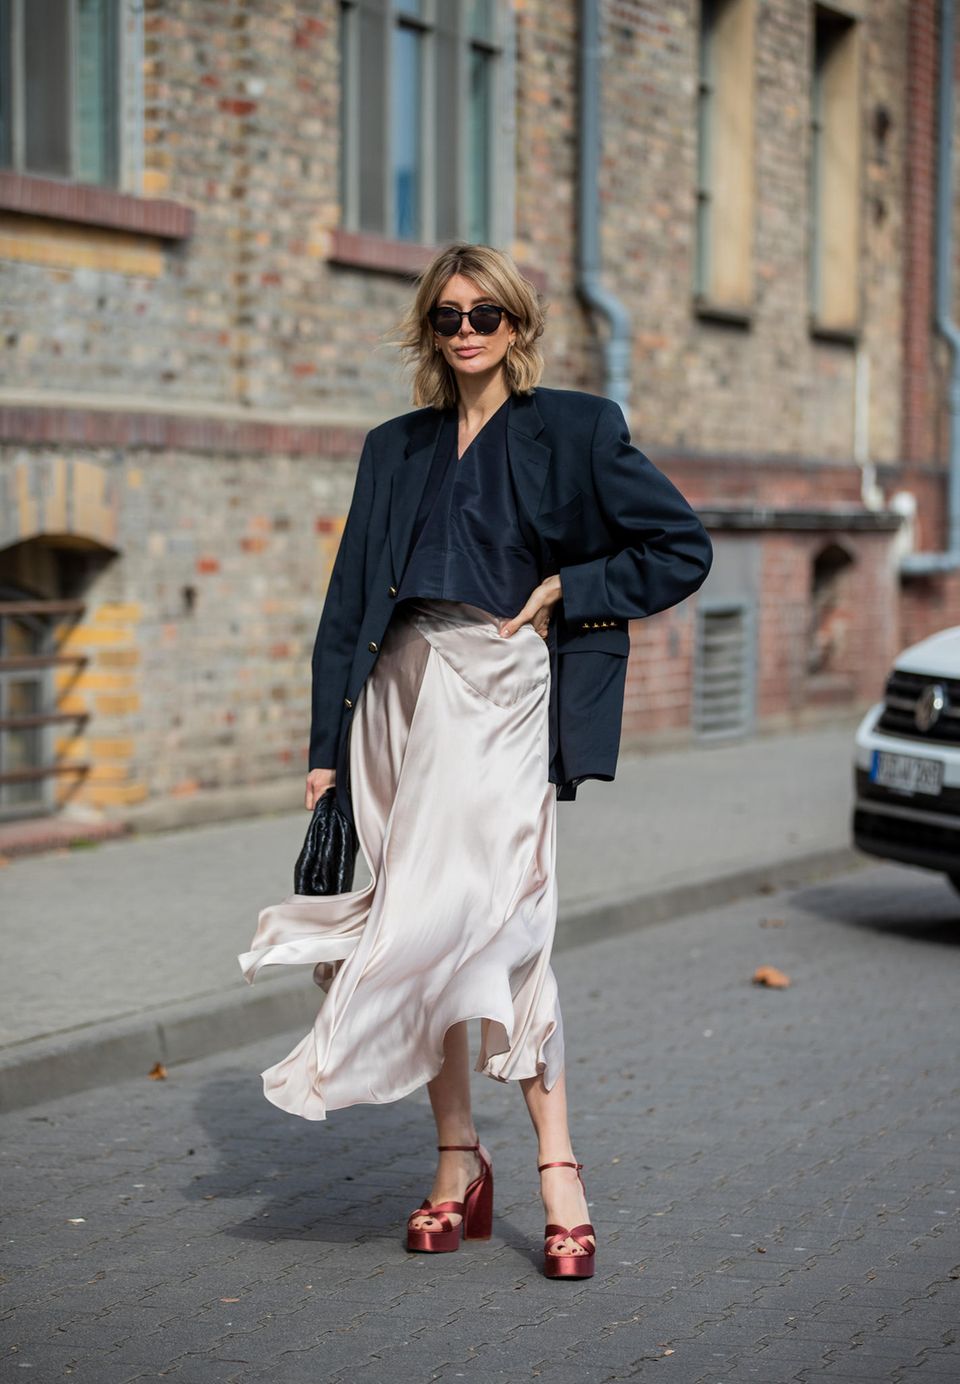 A stylish twist: satin skirt meets blazer chic.